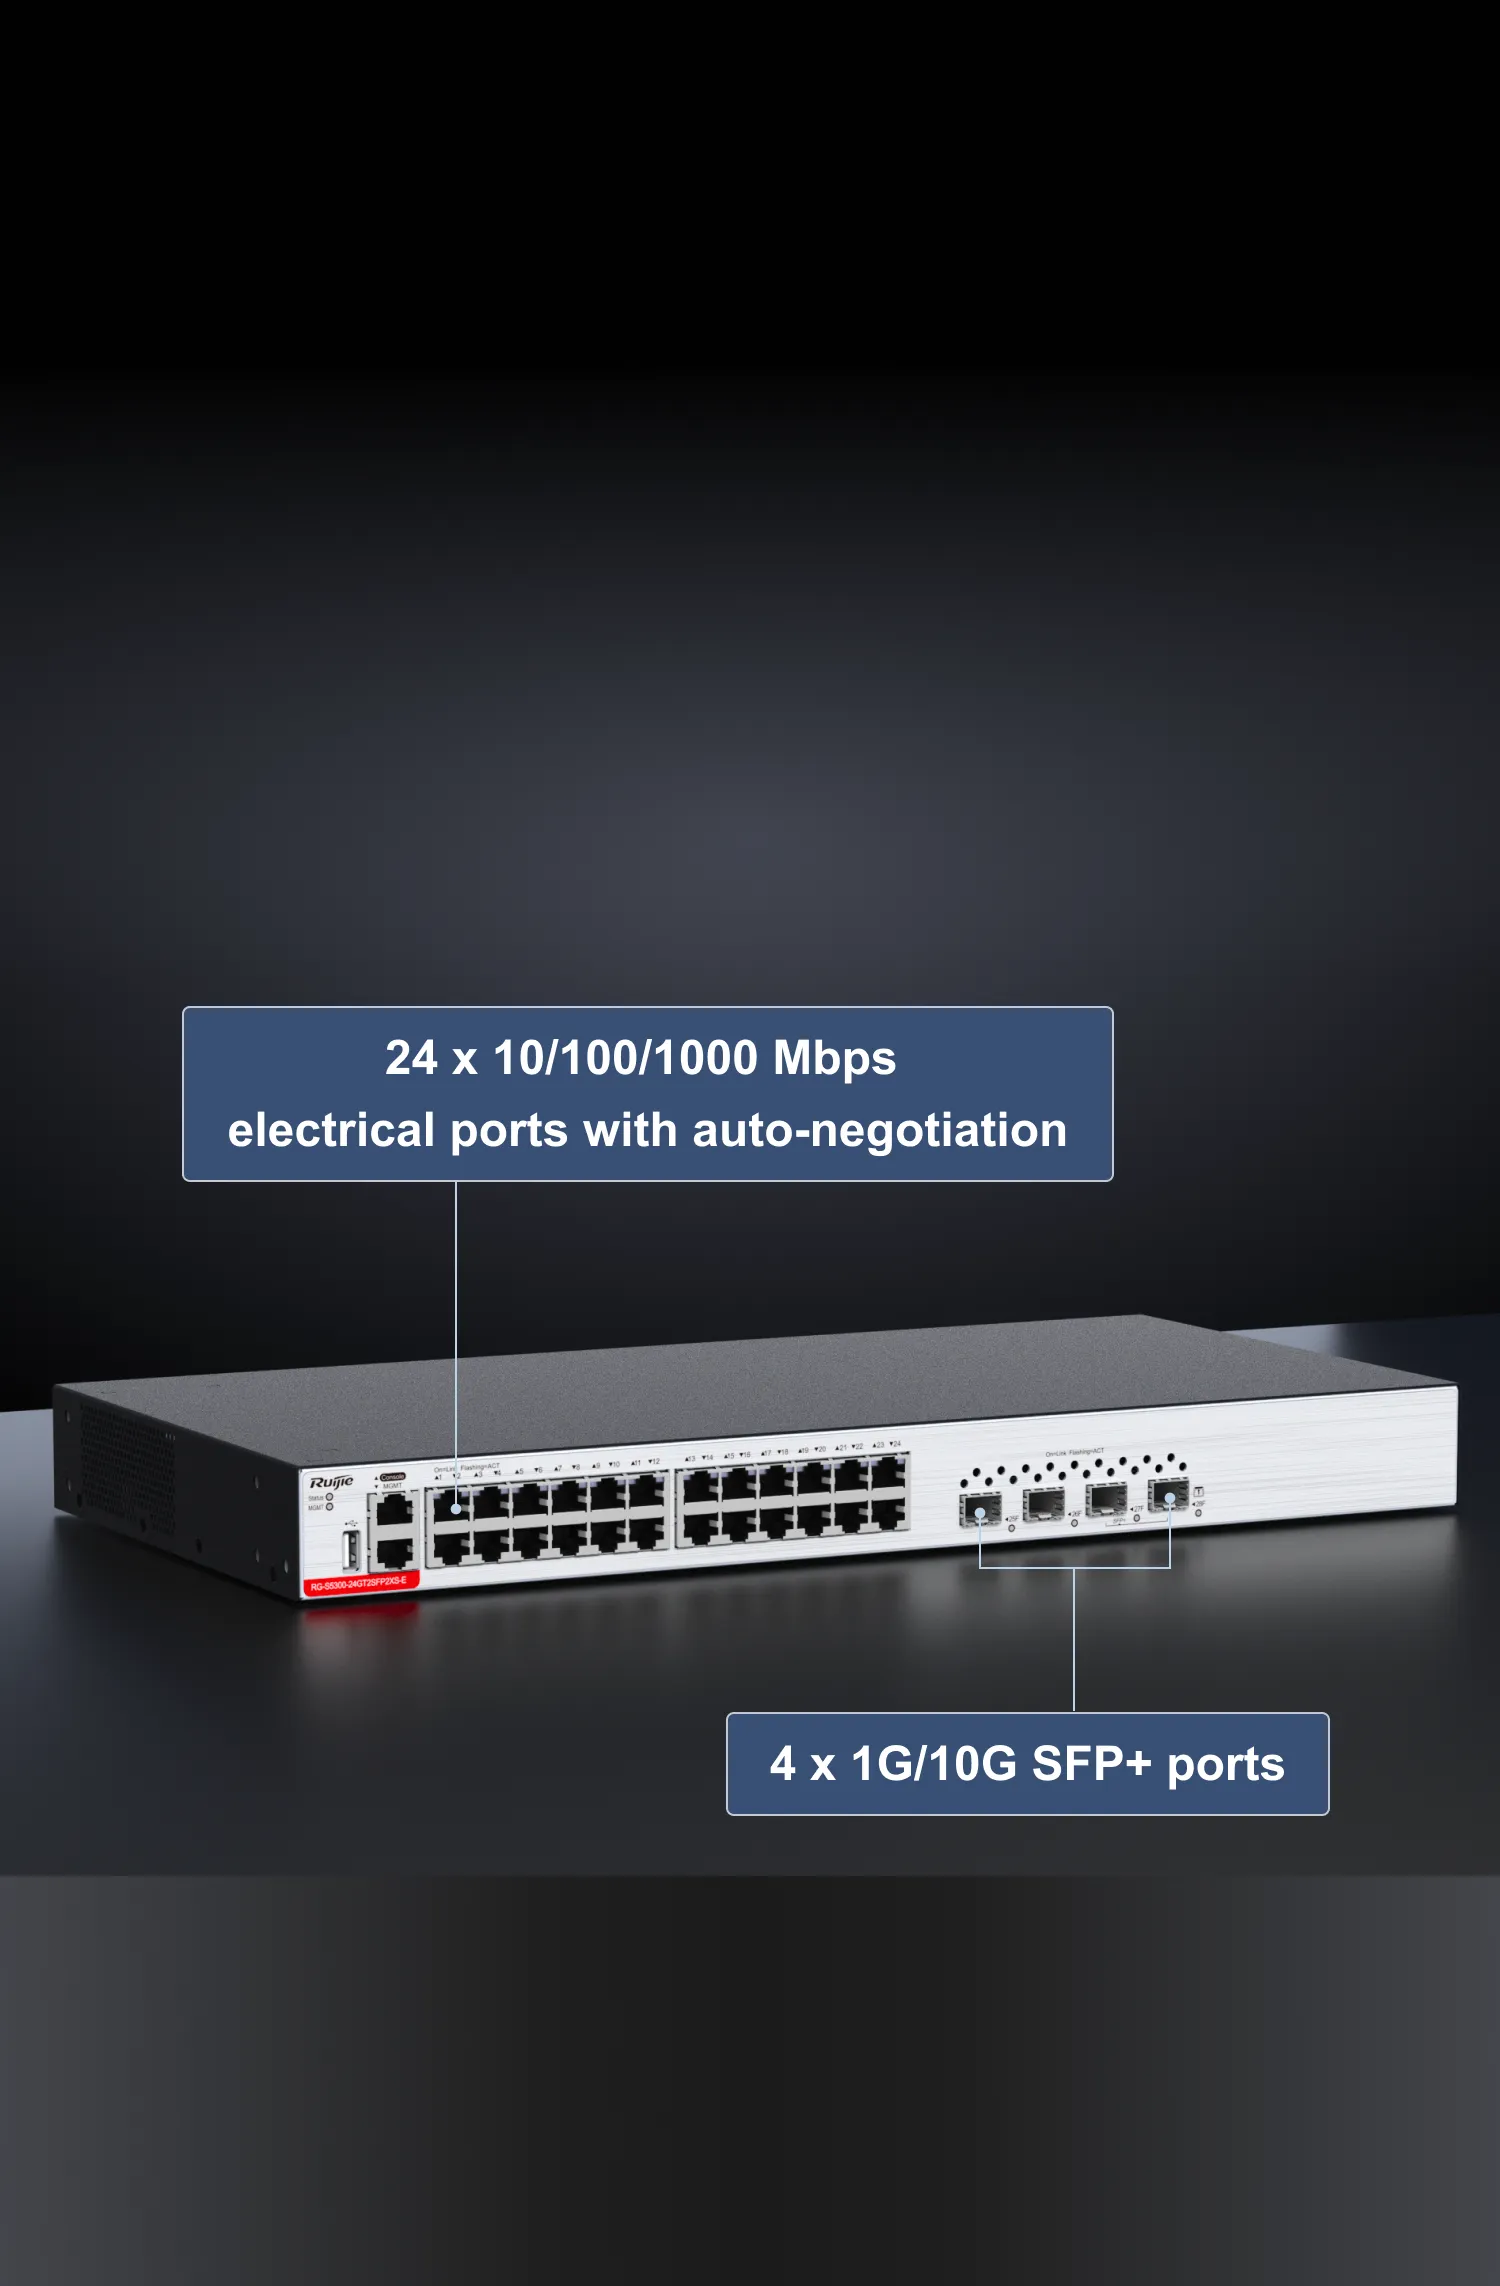 24-Port Fanless Gigabit Ethernet L2+ Stackable Switch with 10G Uplinks,  S5300-24T4X - QSFPTEK